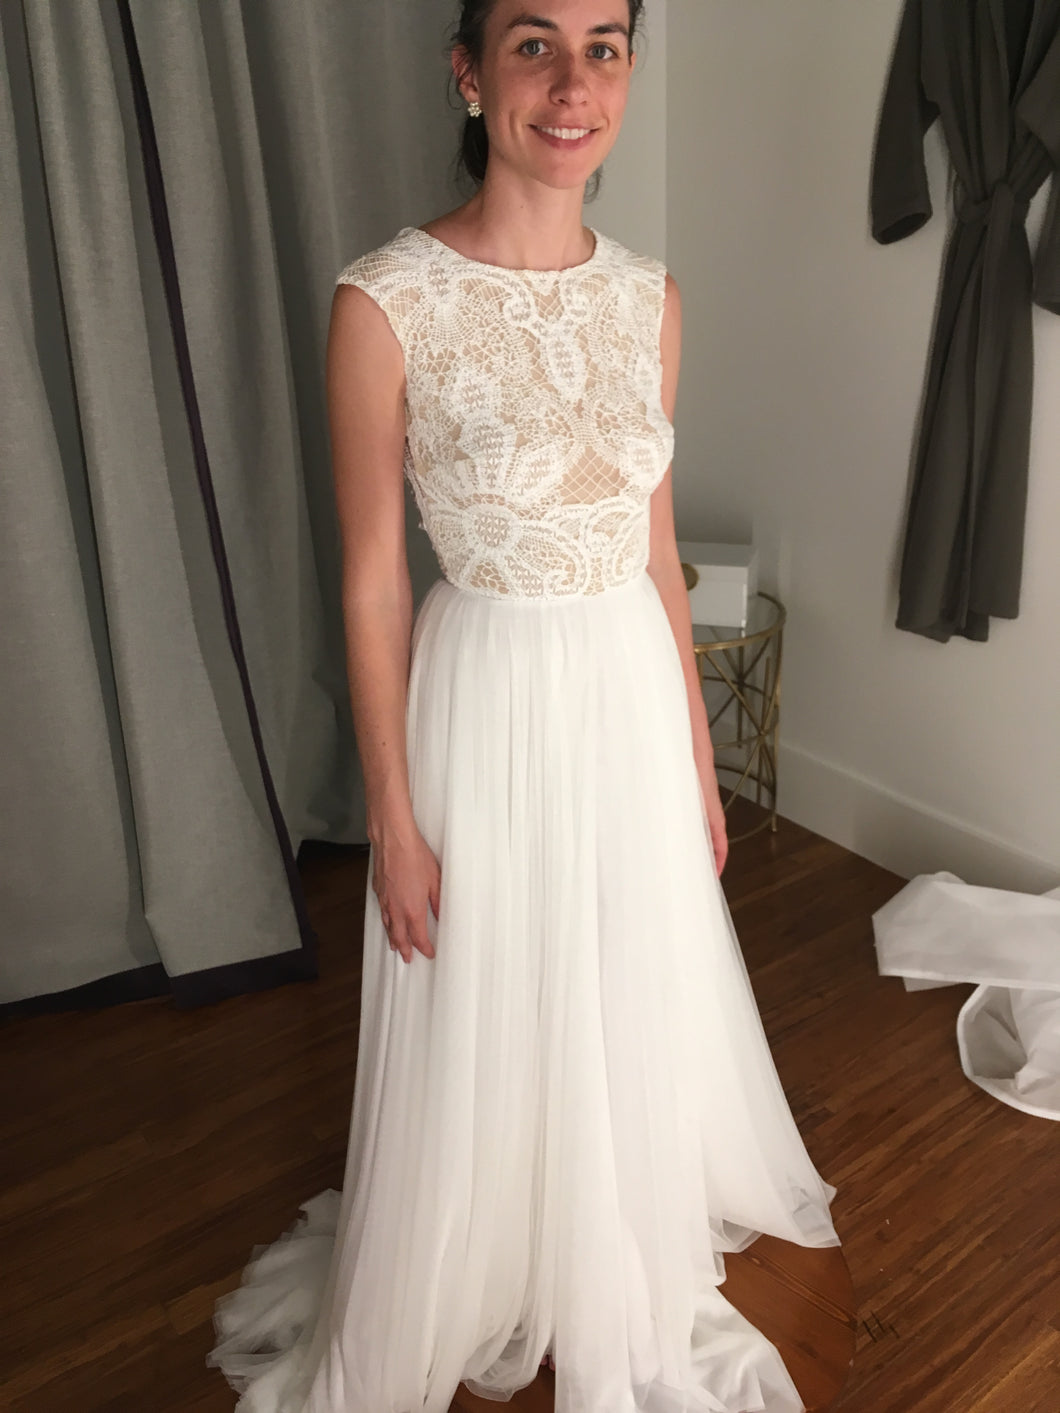 Daalarna 'Modern' size 2 new wedding dress front view on bride